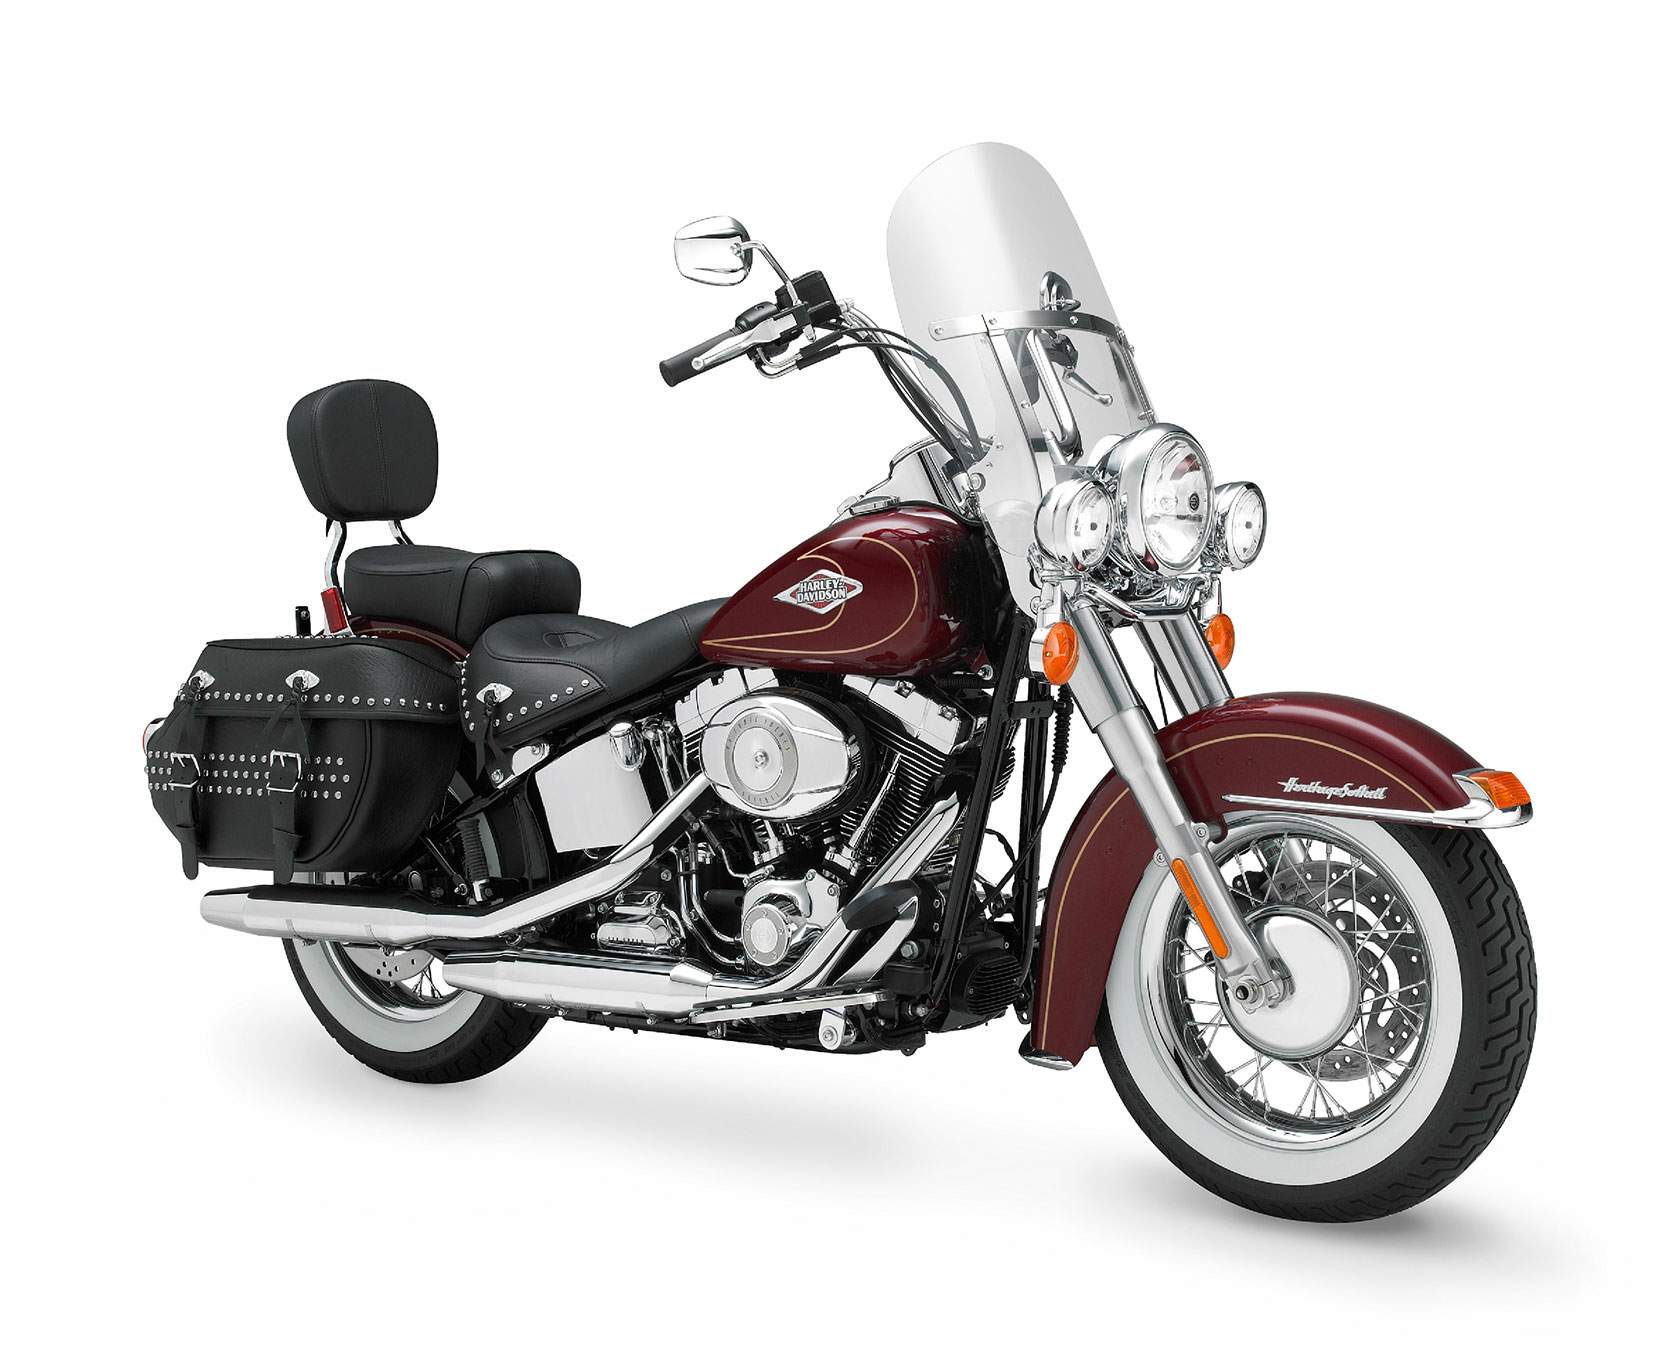 Harley-Davidson Harley Davidson FLSTC Heritage Softail Classic (2010) especificaciones técnicas